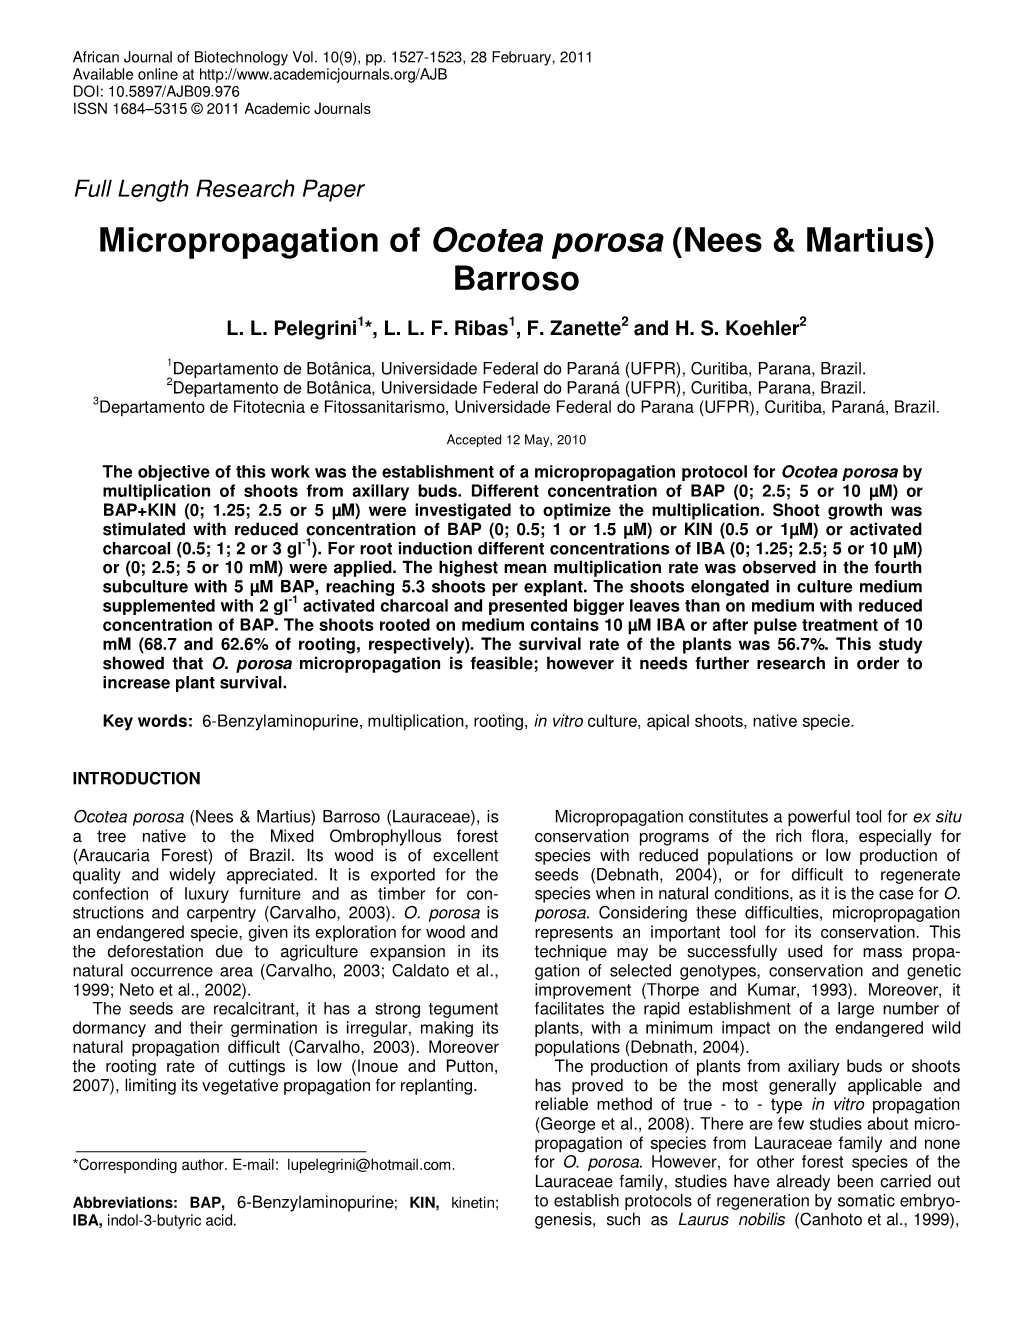 Micropropagation of Ocotea Porosa (Nees & Martius) Barroso